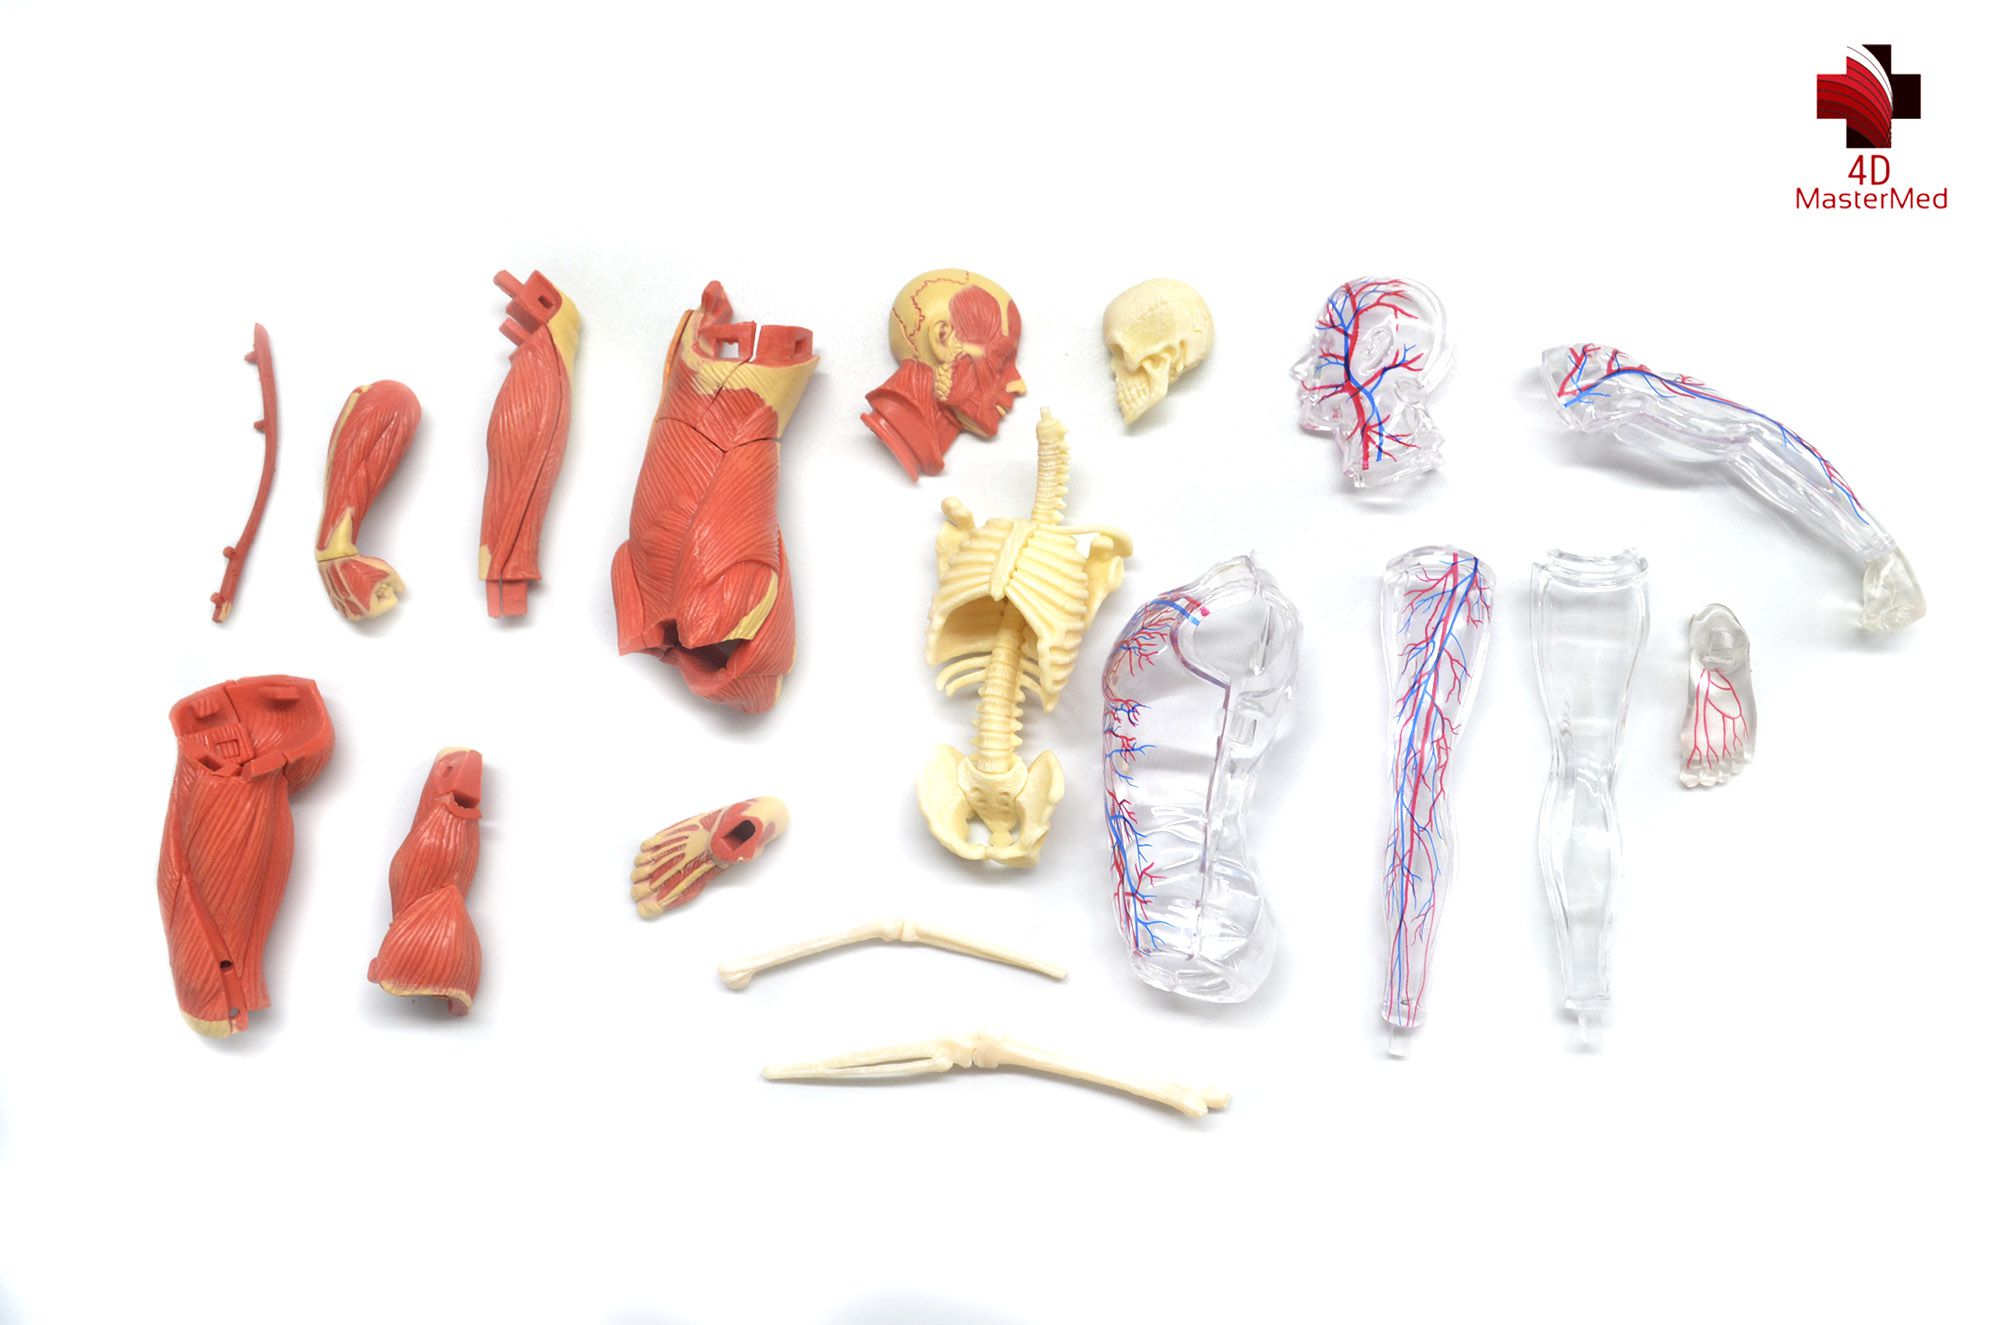 Anatomia do Esqueleto e Músculos Humano  - 4D MasterMed